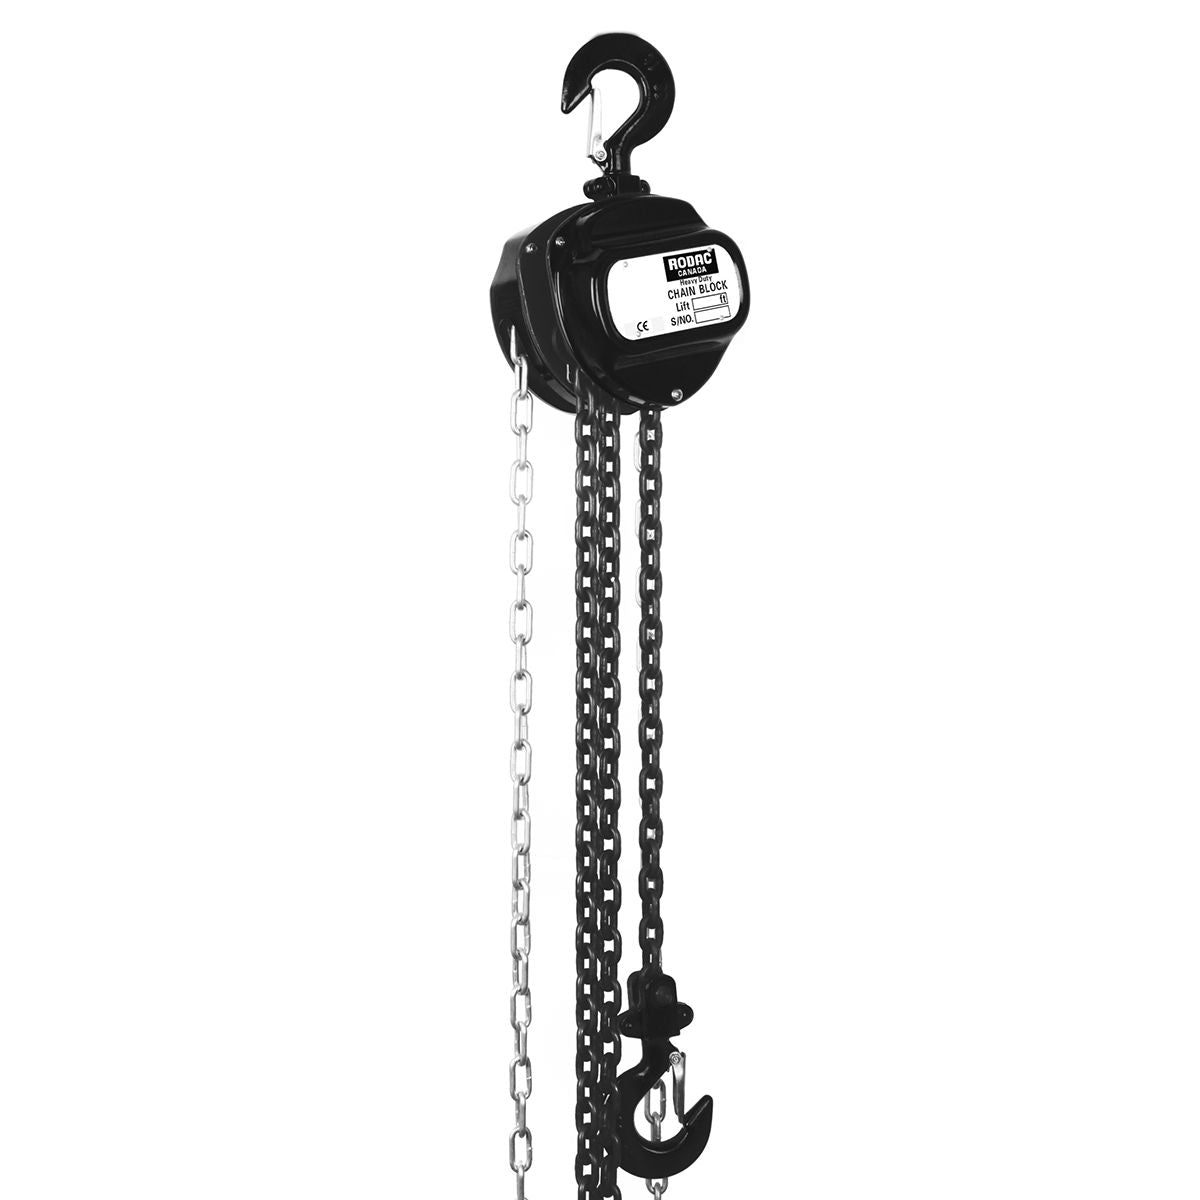 Chain Hoist 2T.